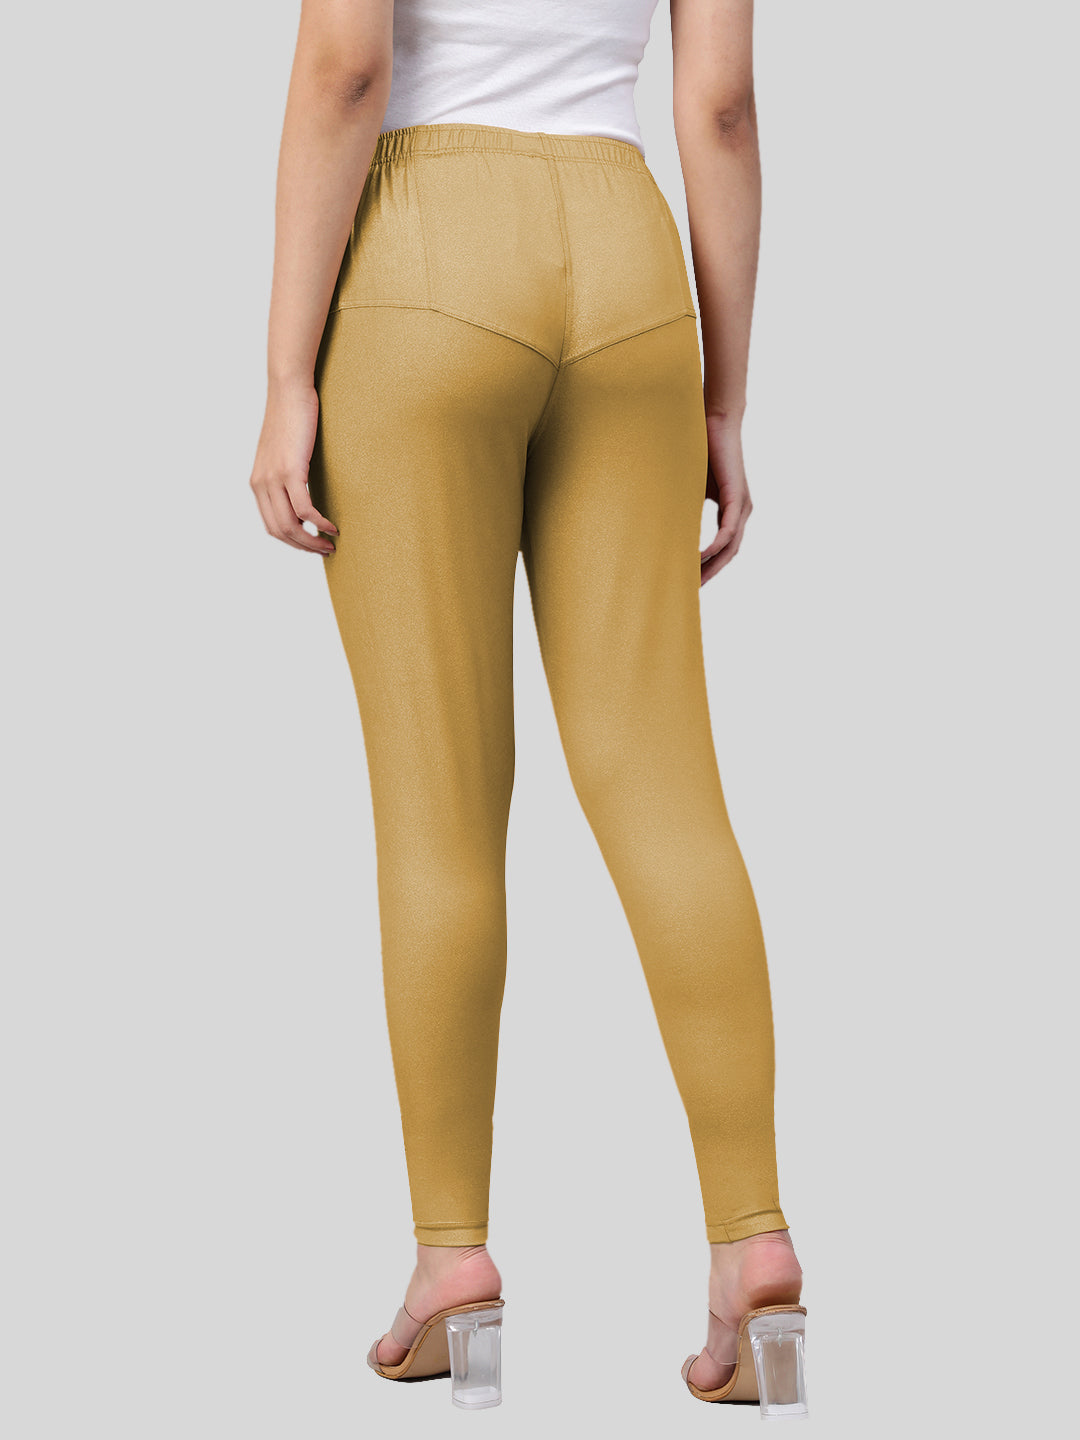 Buy Lyra Women Solid Premium Cotton Plus Fit Churidar Leggings | Mid-Waist  | Fashionwear Black at Amazon.in